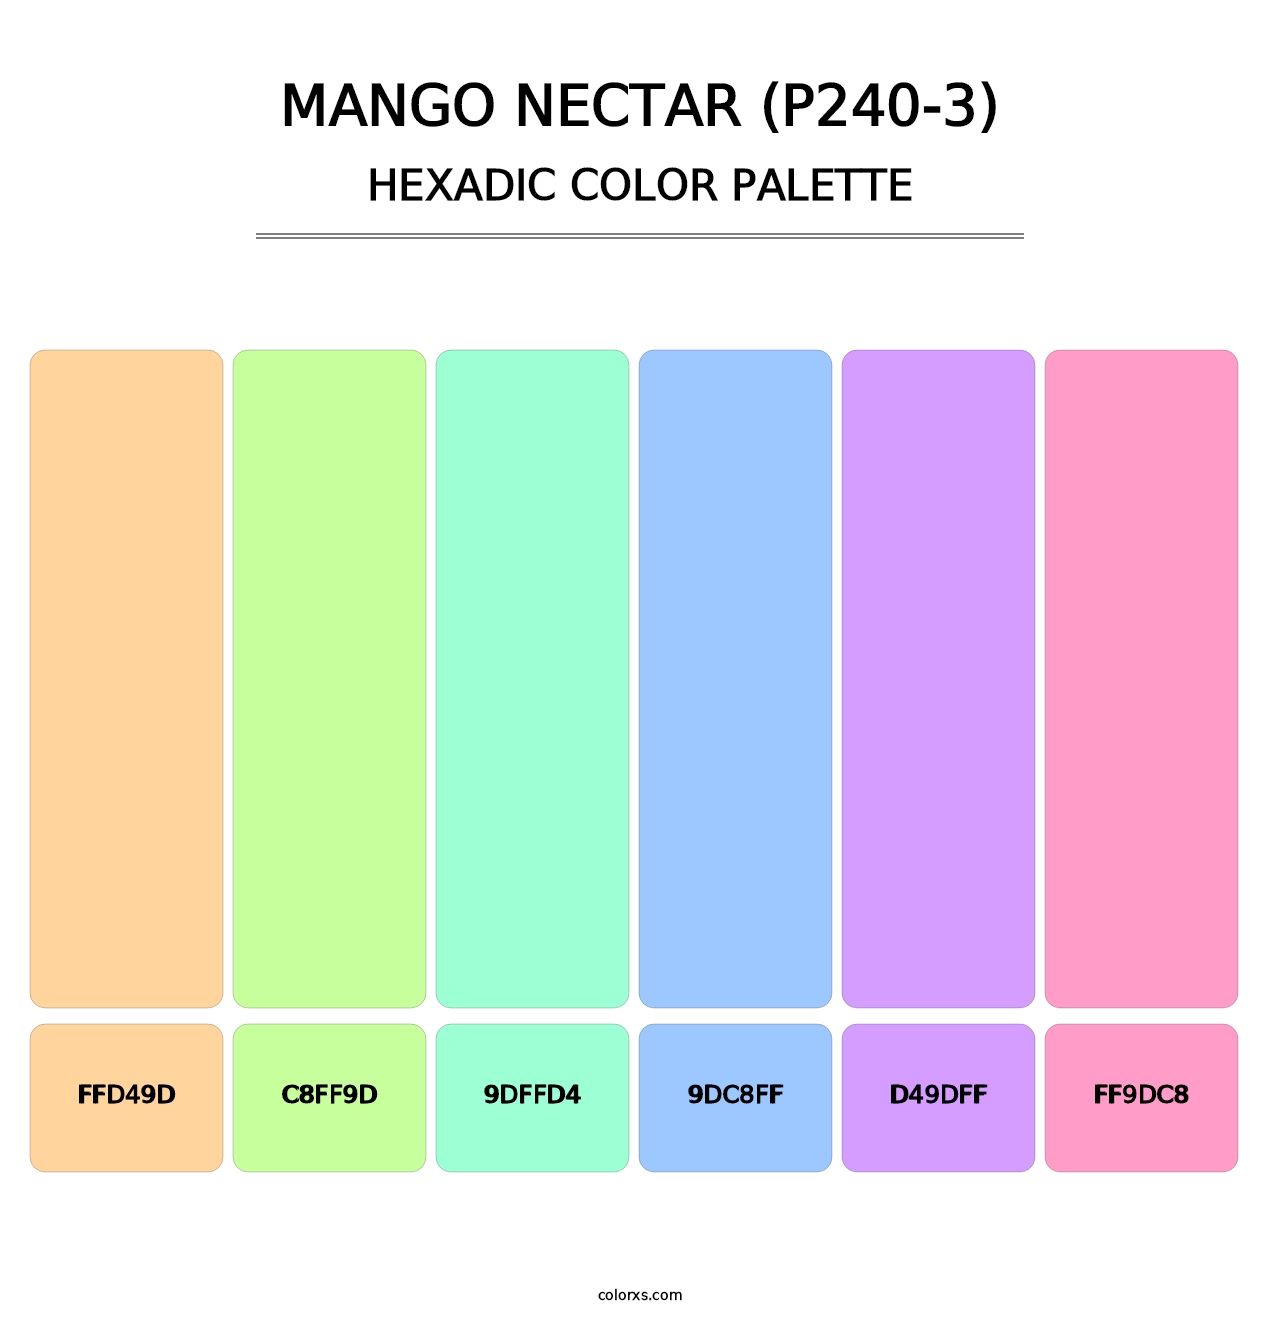 Mango Nectar (P240-3) - Hexadic Color Palette